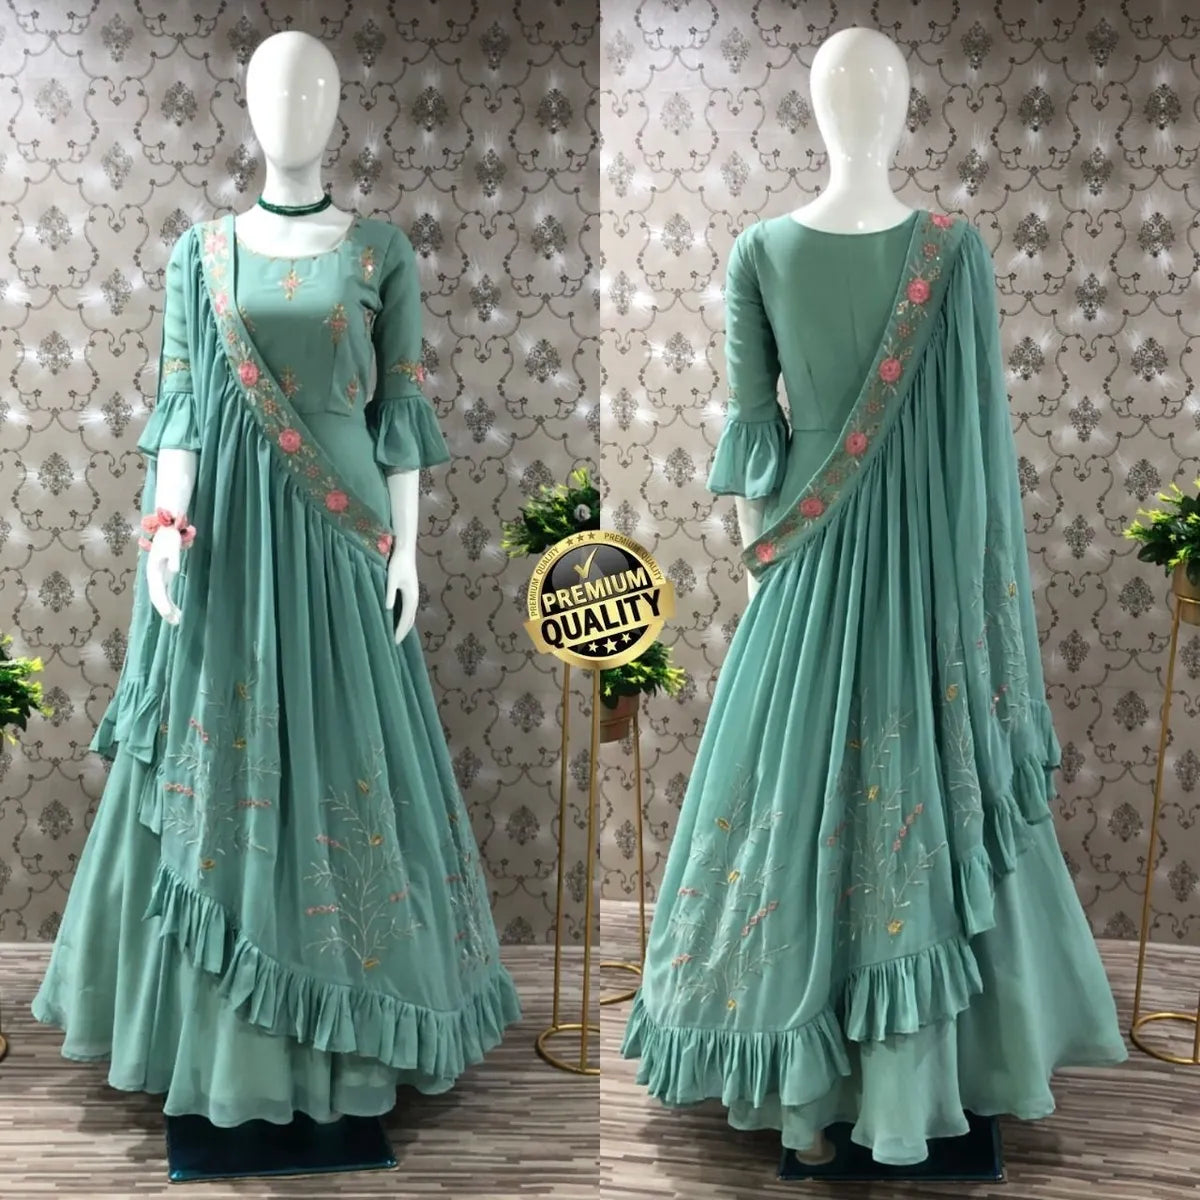 Elegant Embroidered Designer 3 Style Gown In Chandler